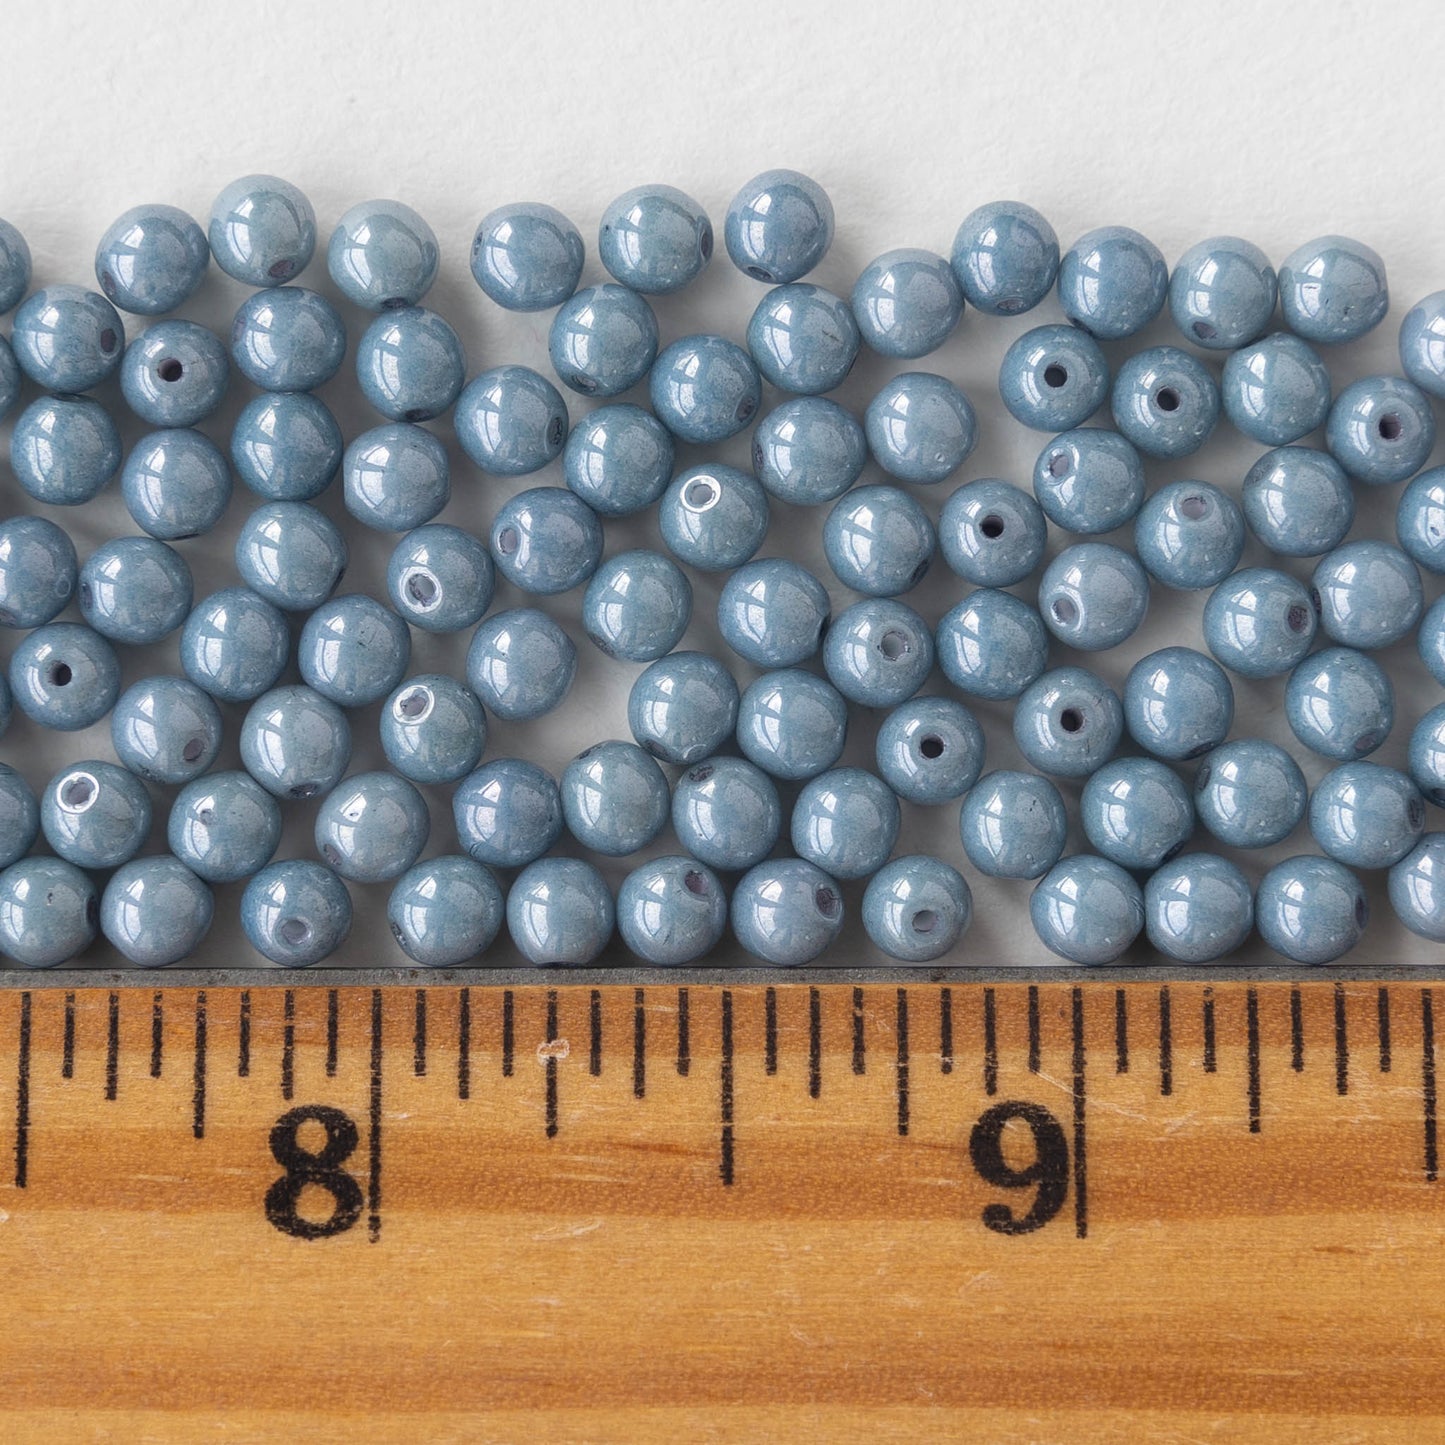 4mm Round Glass Beads - Light Blue Luster - 100 Beads